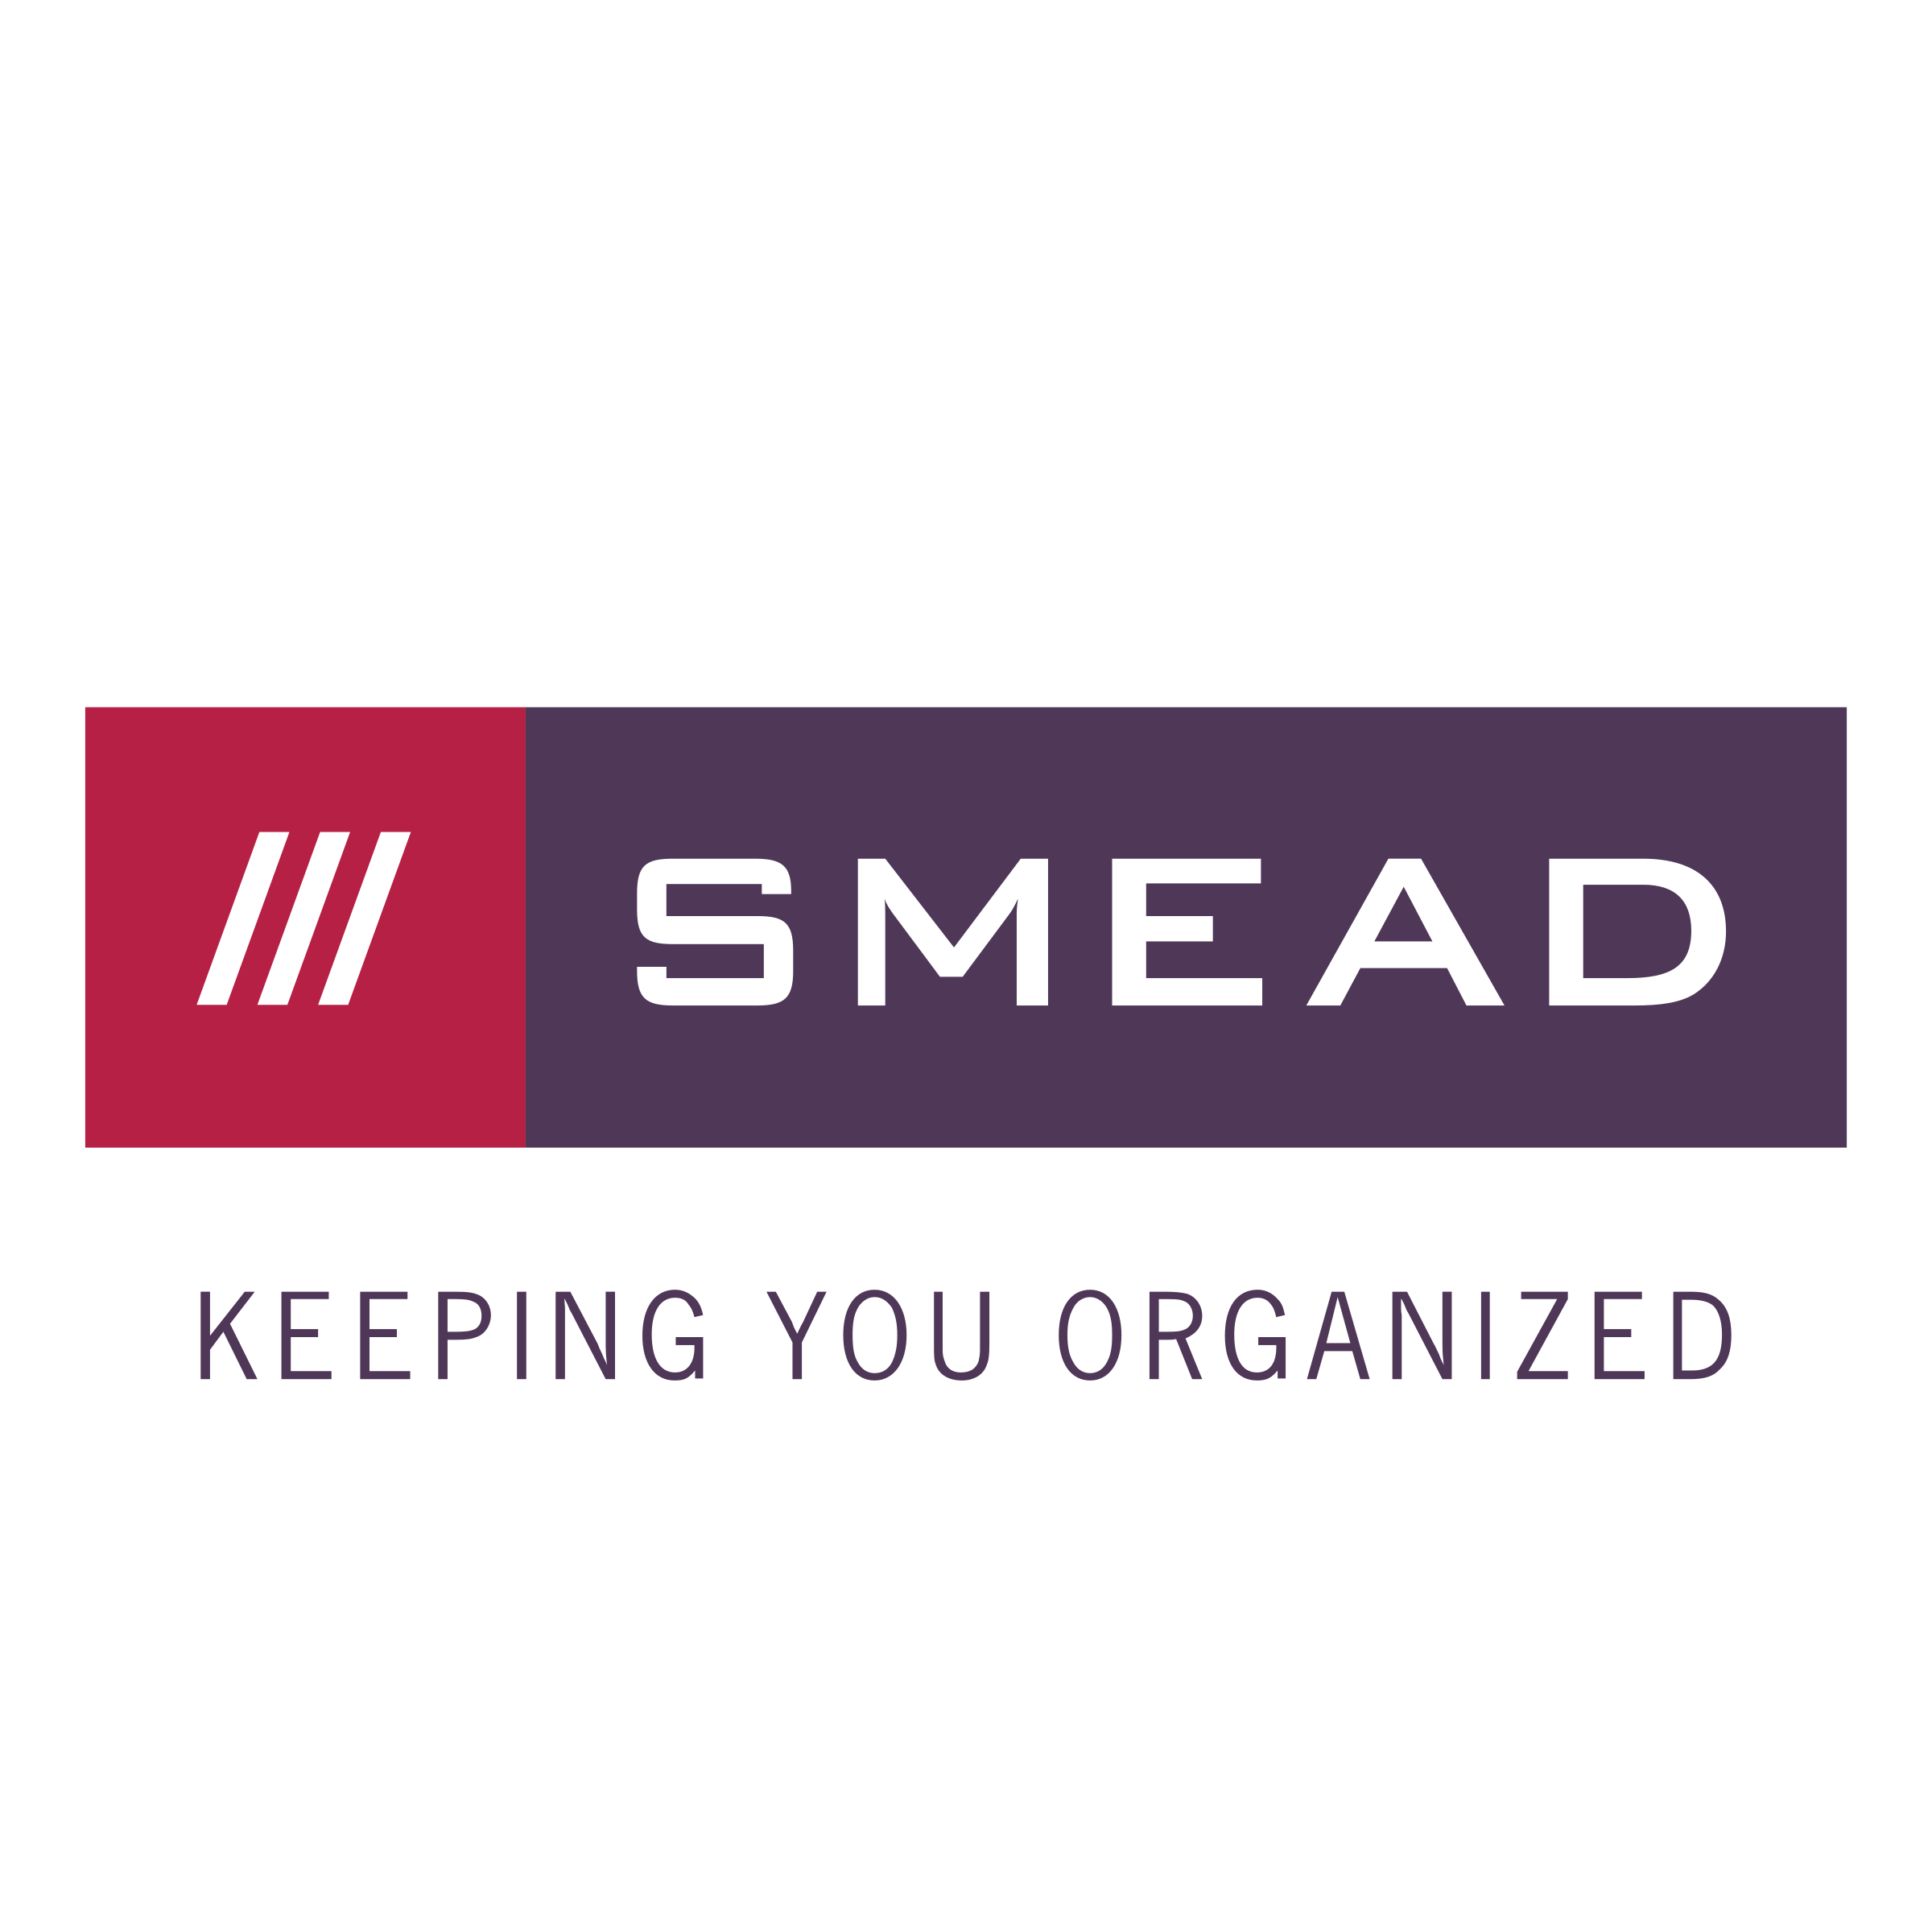 Smead Logo - Smead Manufacturing Logo PNG Transparent & SVG Vector